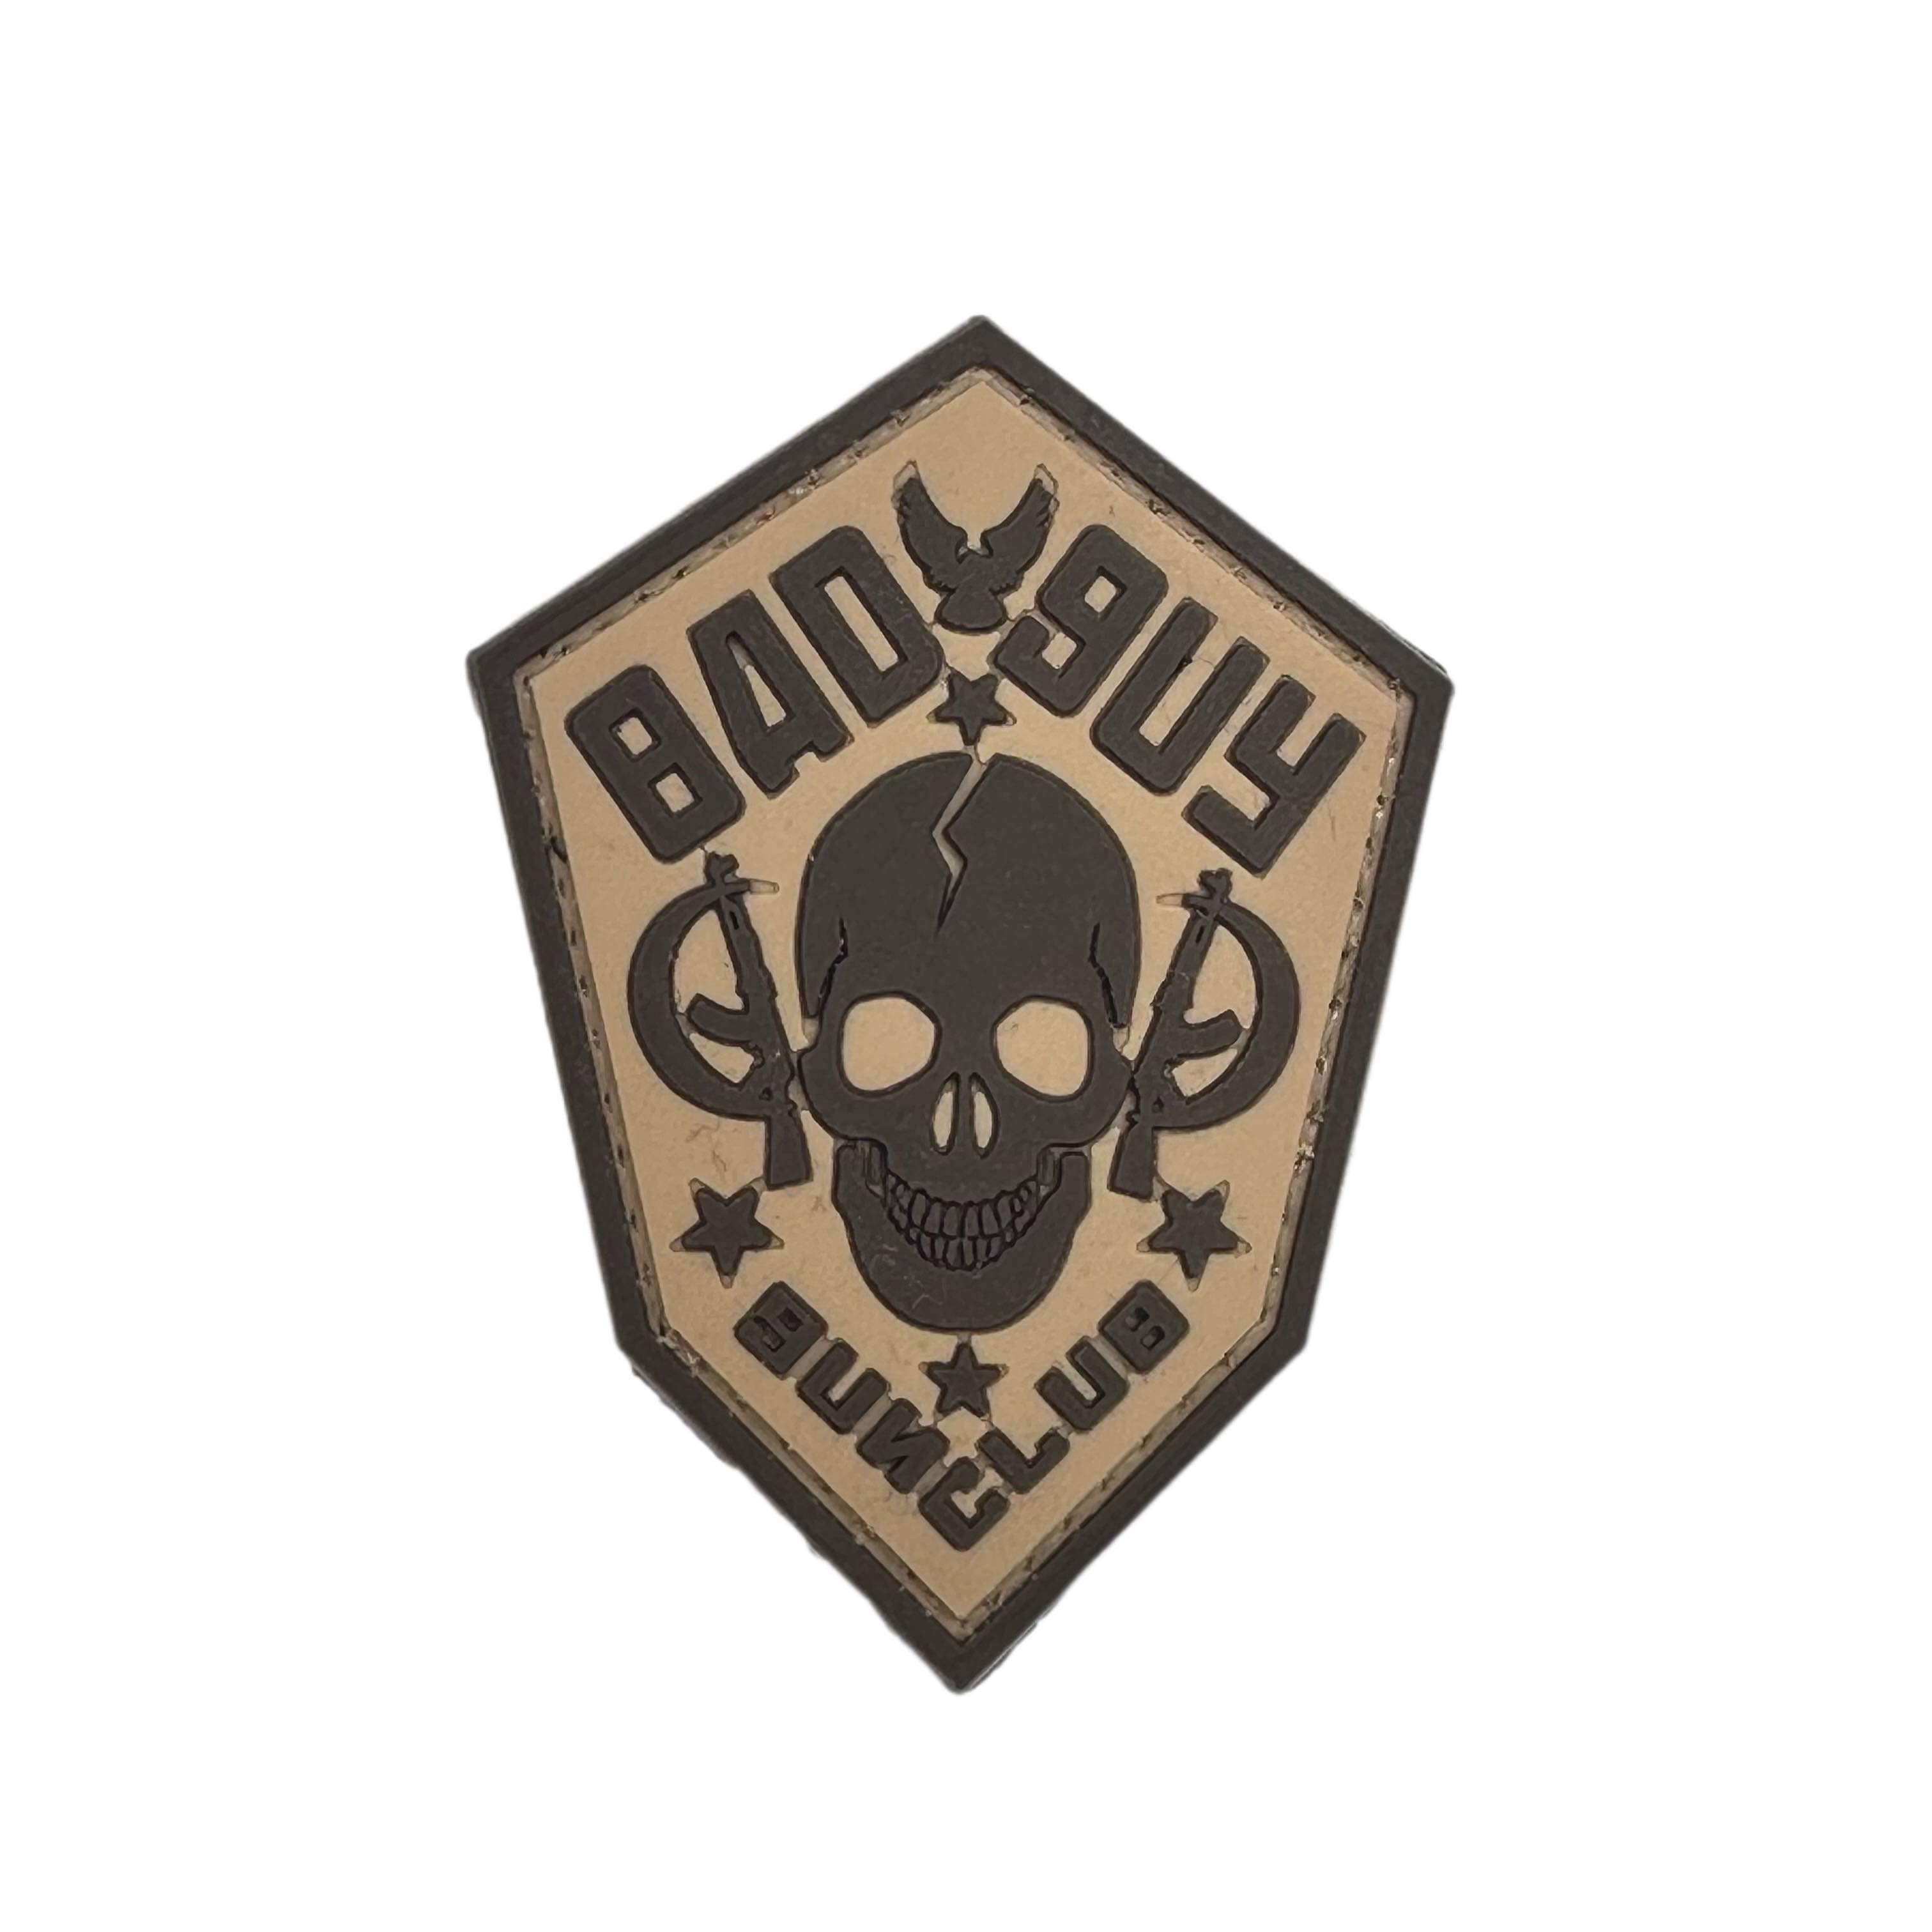 Rubber Patch - Bad Guy Gun Club